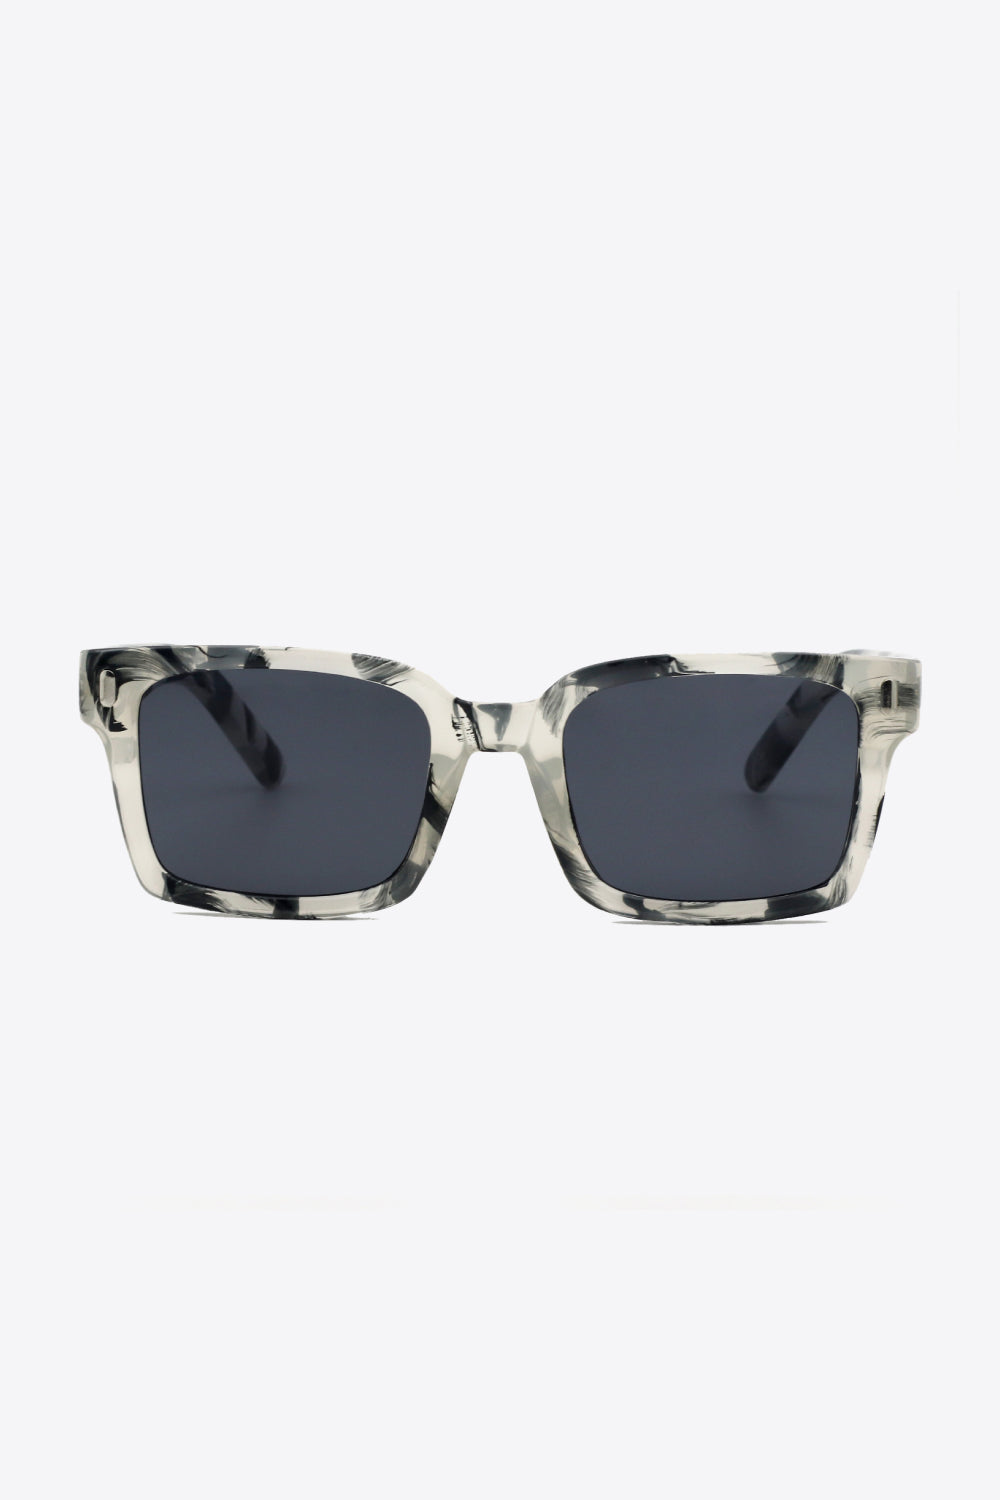 Carefree UV400 Polycarbonate Square Sunglasses